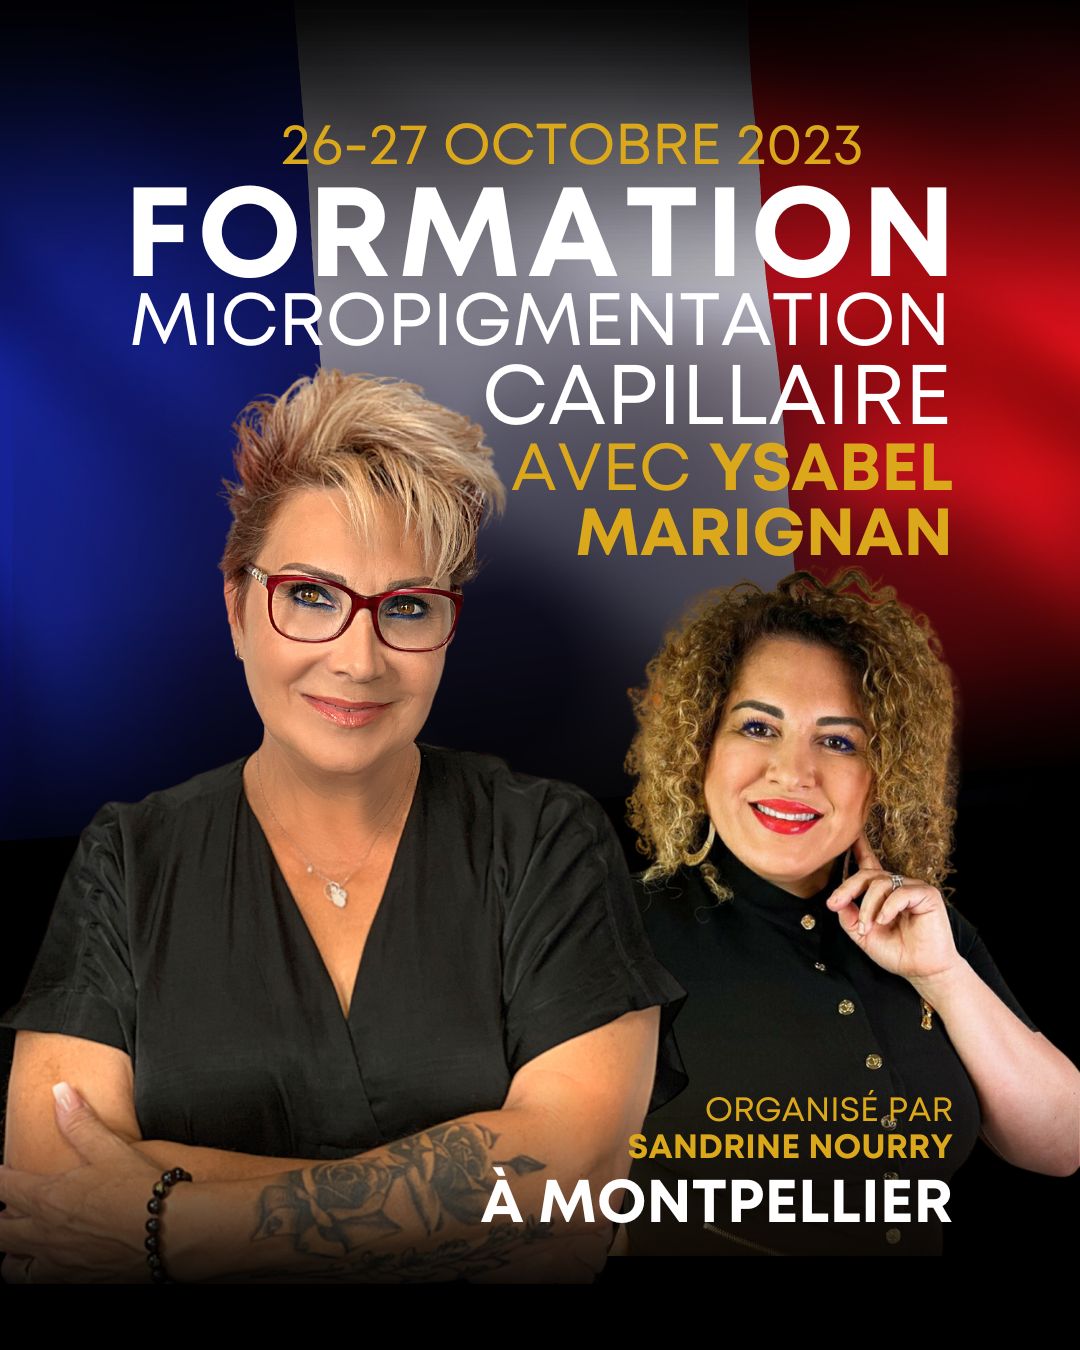 Formation micropigmentation en France à Montpellier - Sandrine nourry et Ysabel marignan sviato